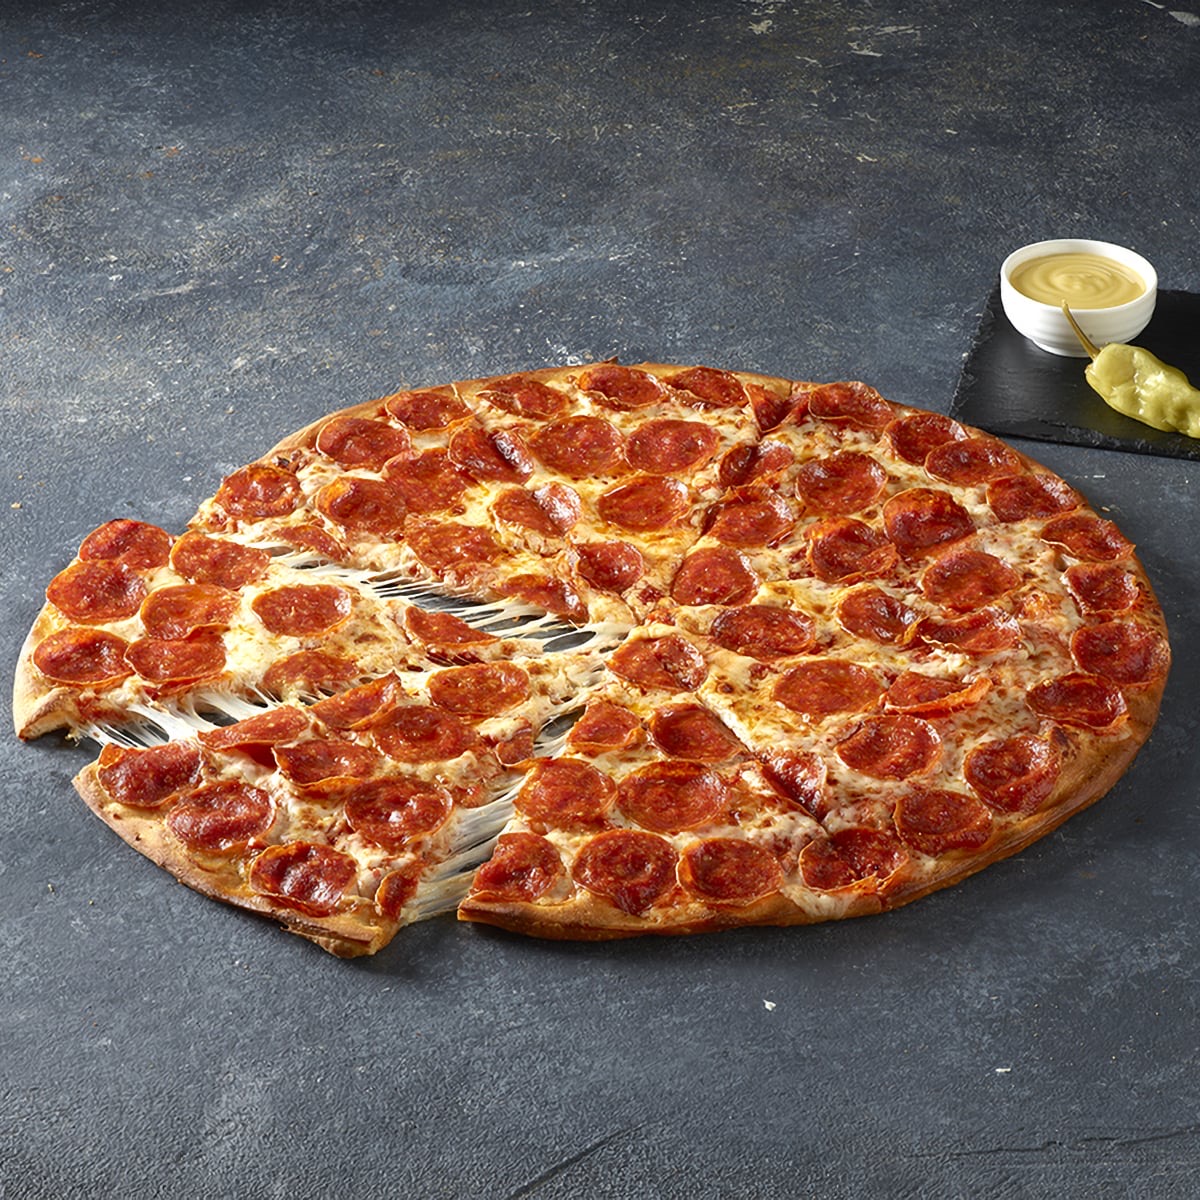 REVIEW: Papa Johns Garlic Epic Stuffed Crust Pizza - The Impulsive Buy